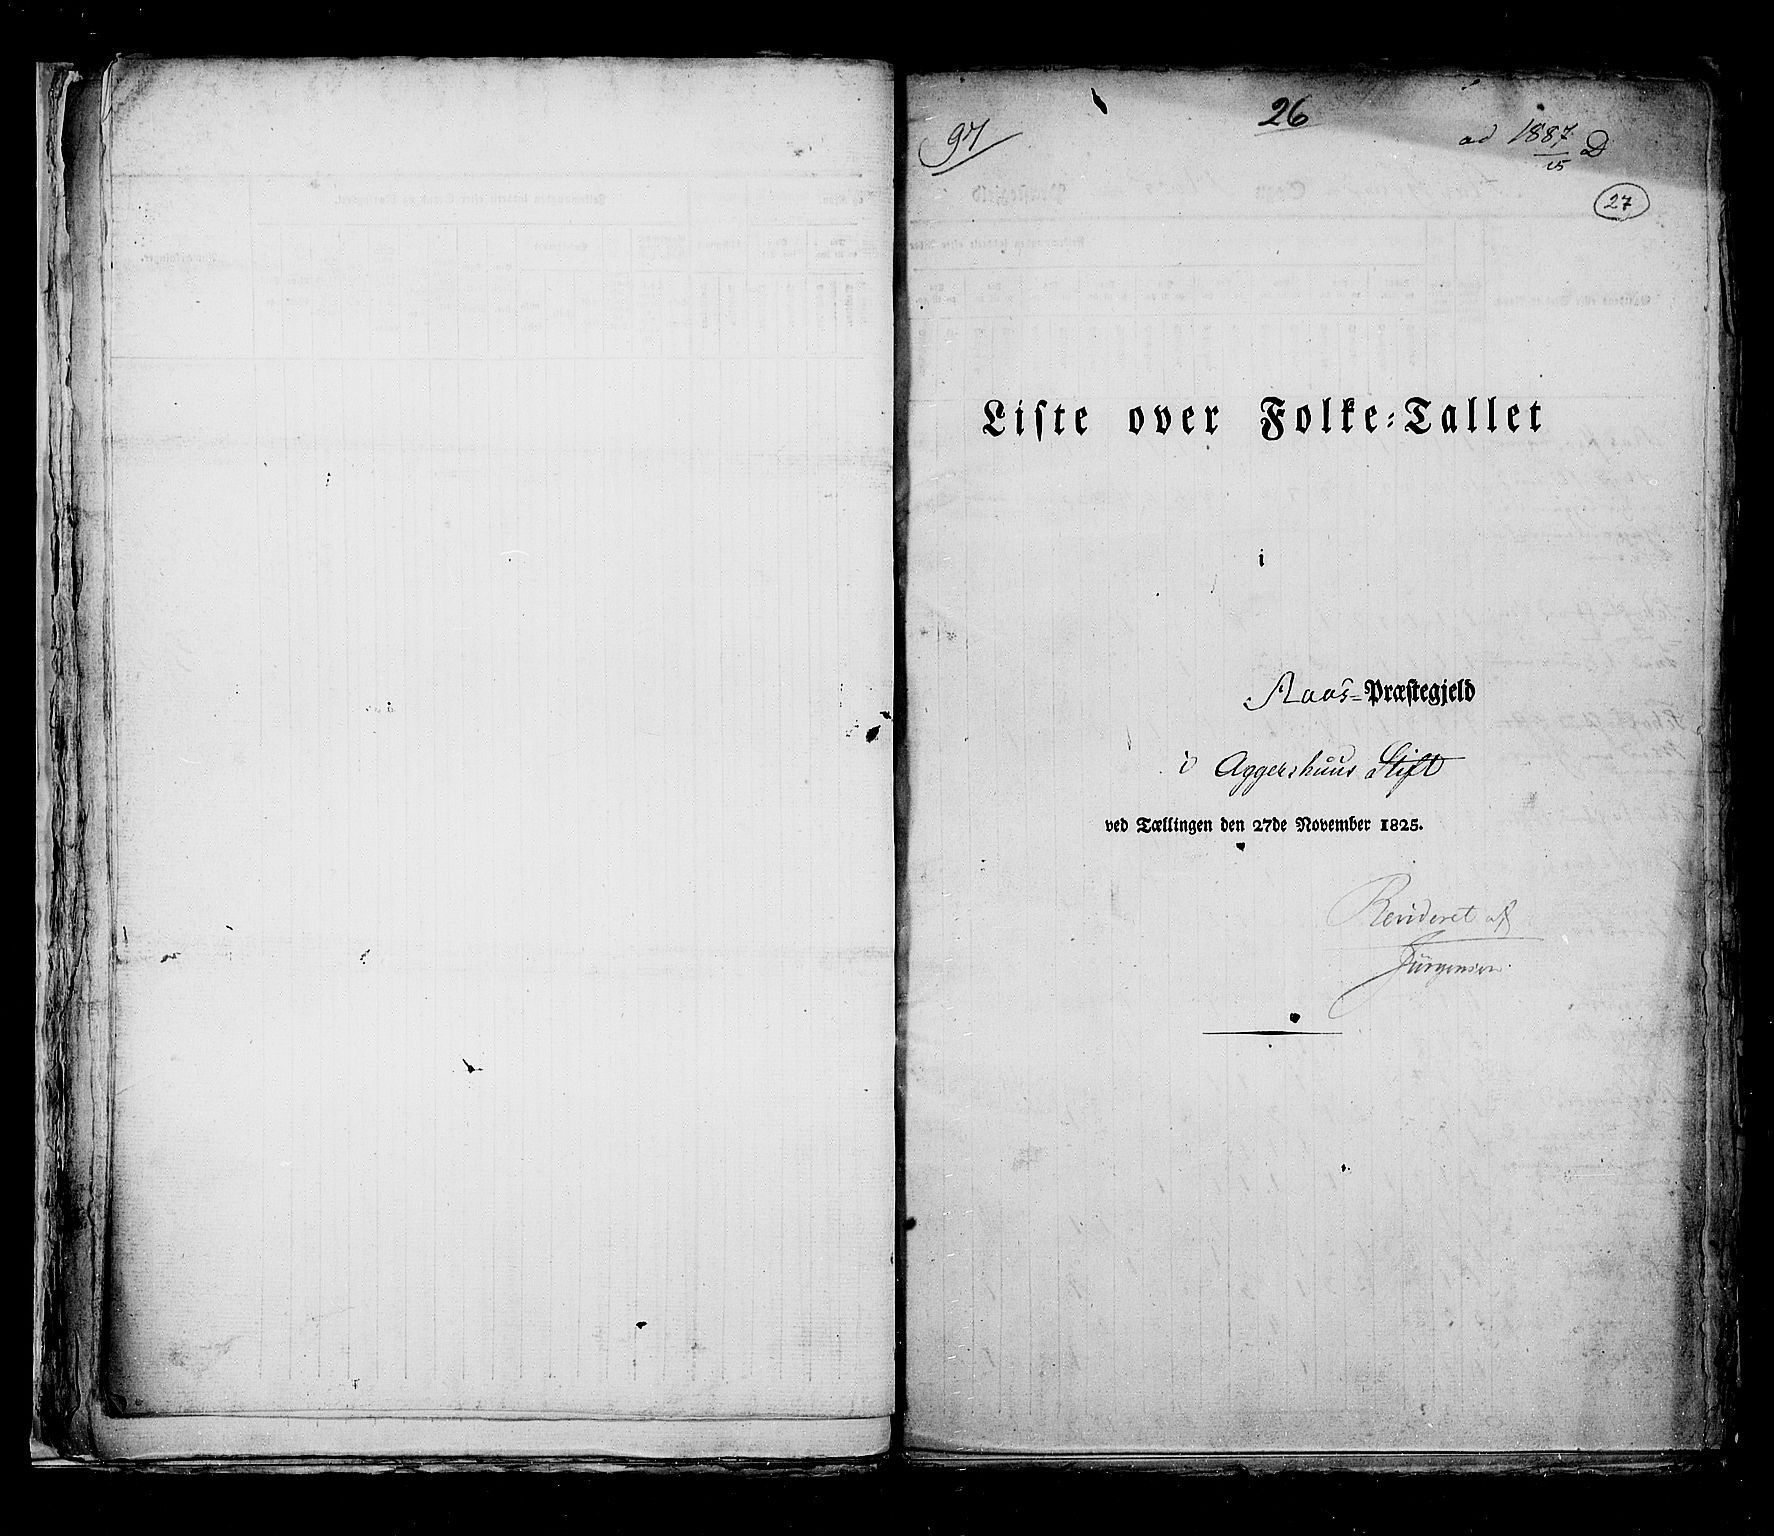 RA, Folketellingen 1825, bind 4: Akershus amt, 1825, s. 27